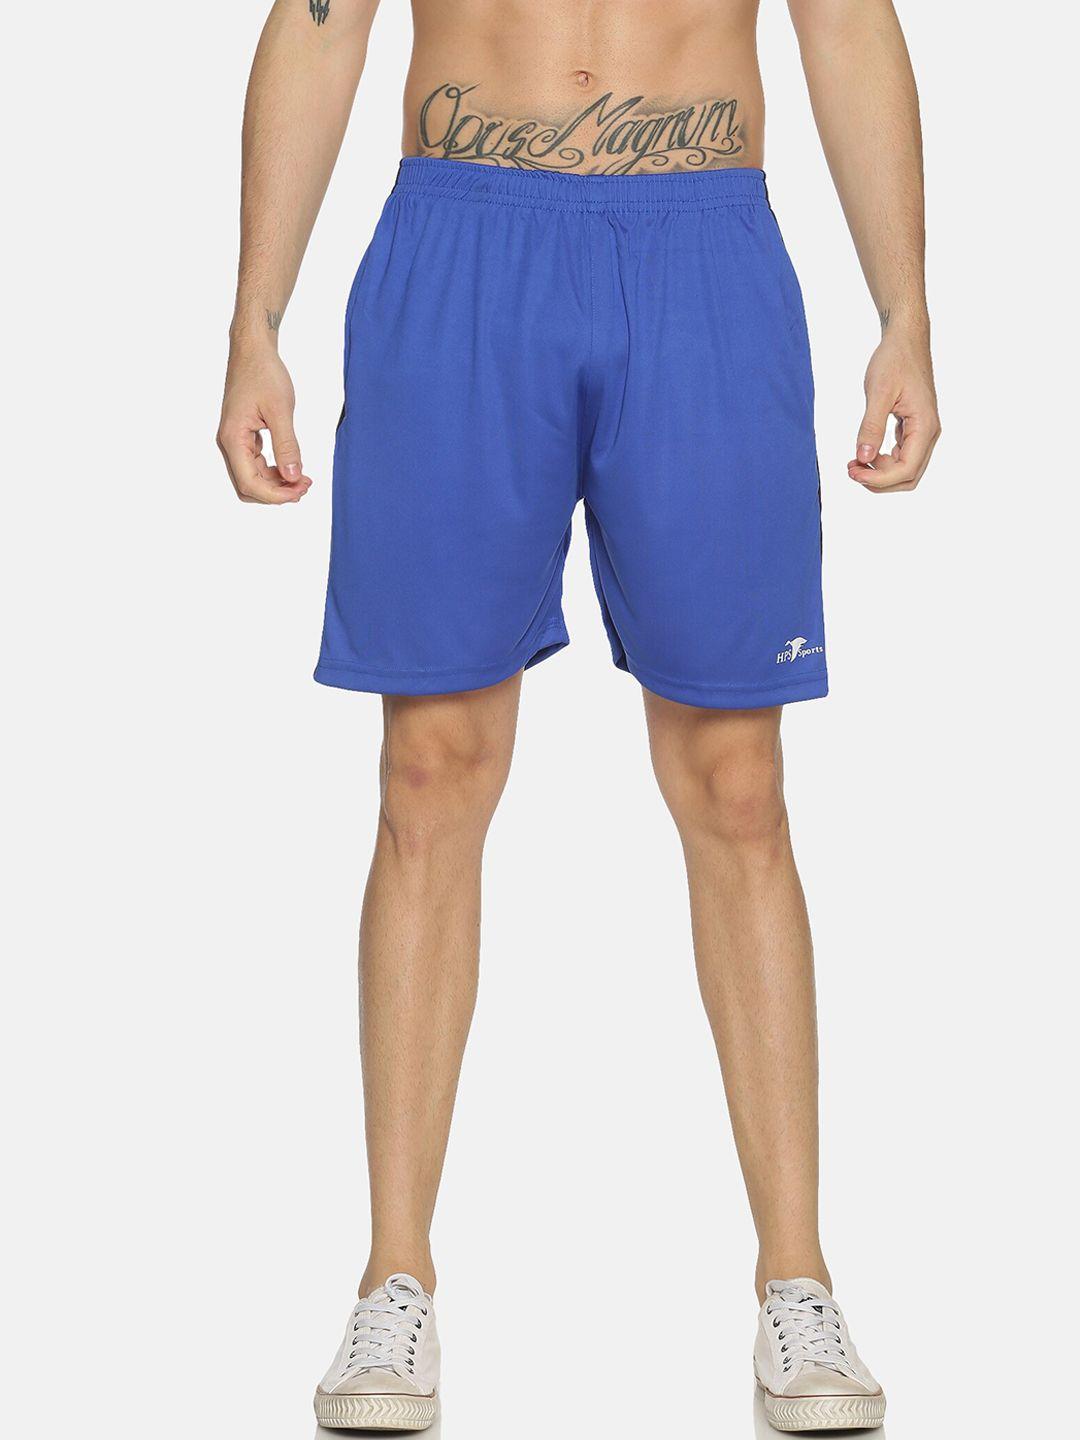 hps-sports-men-blue-sports-shorts